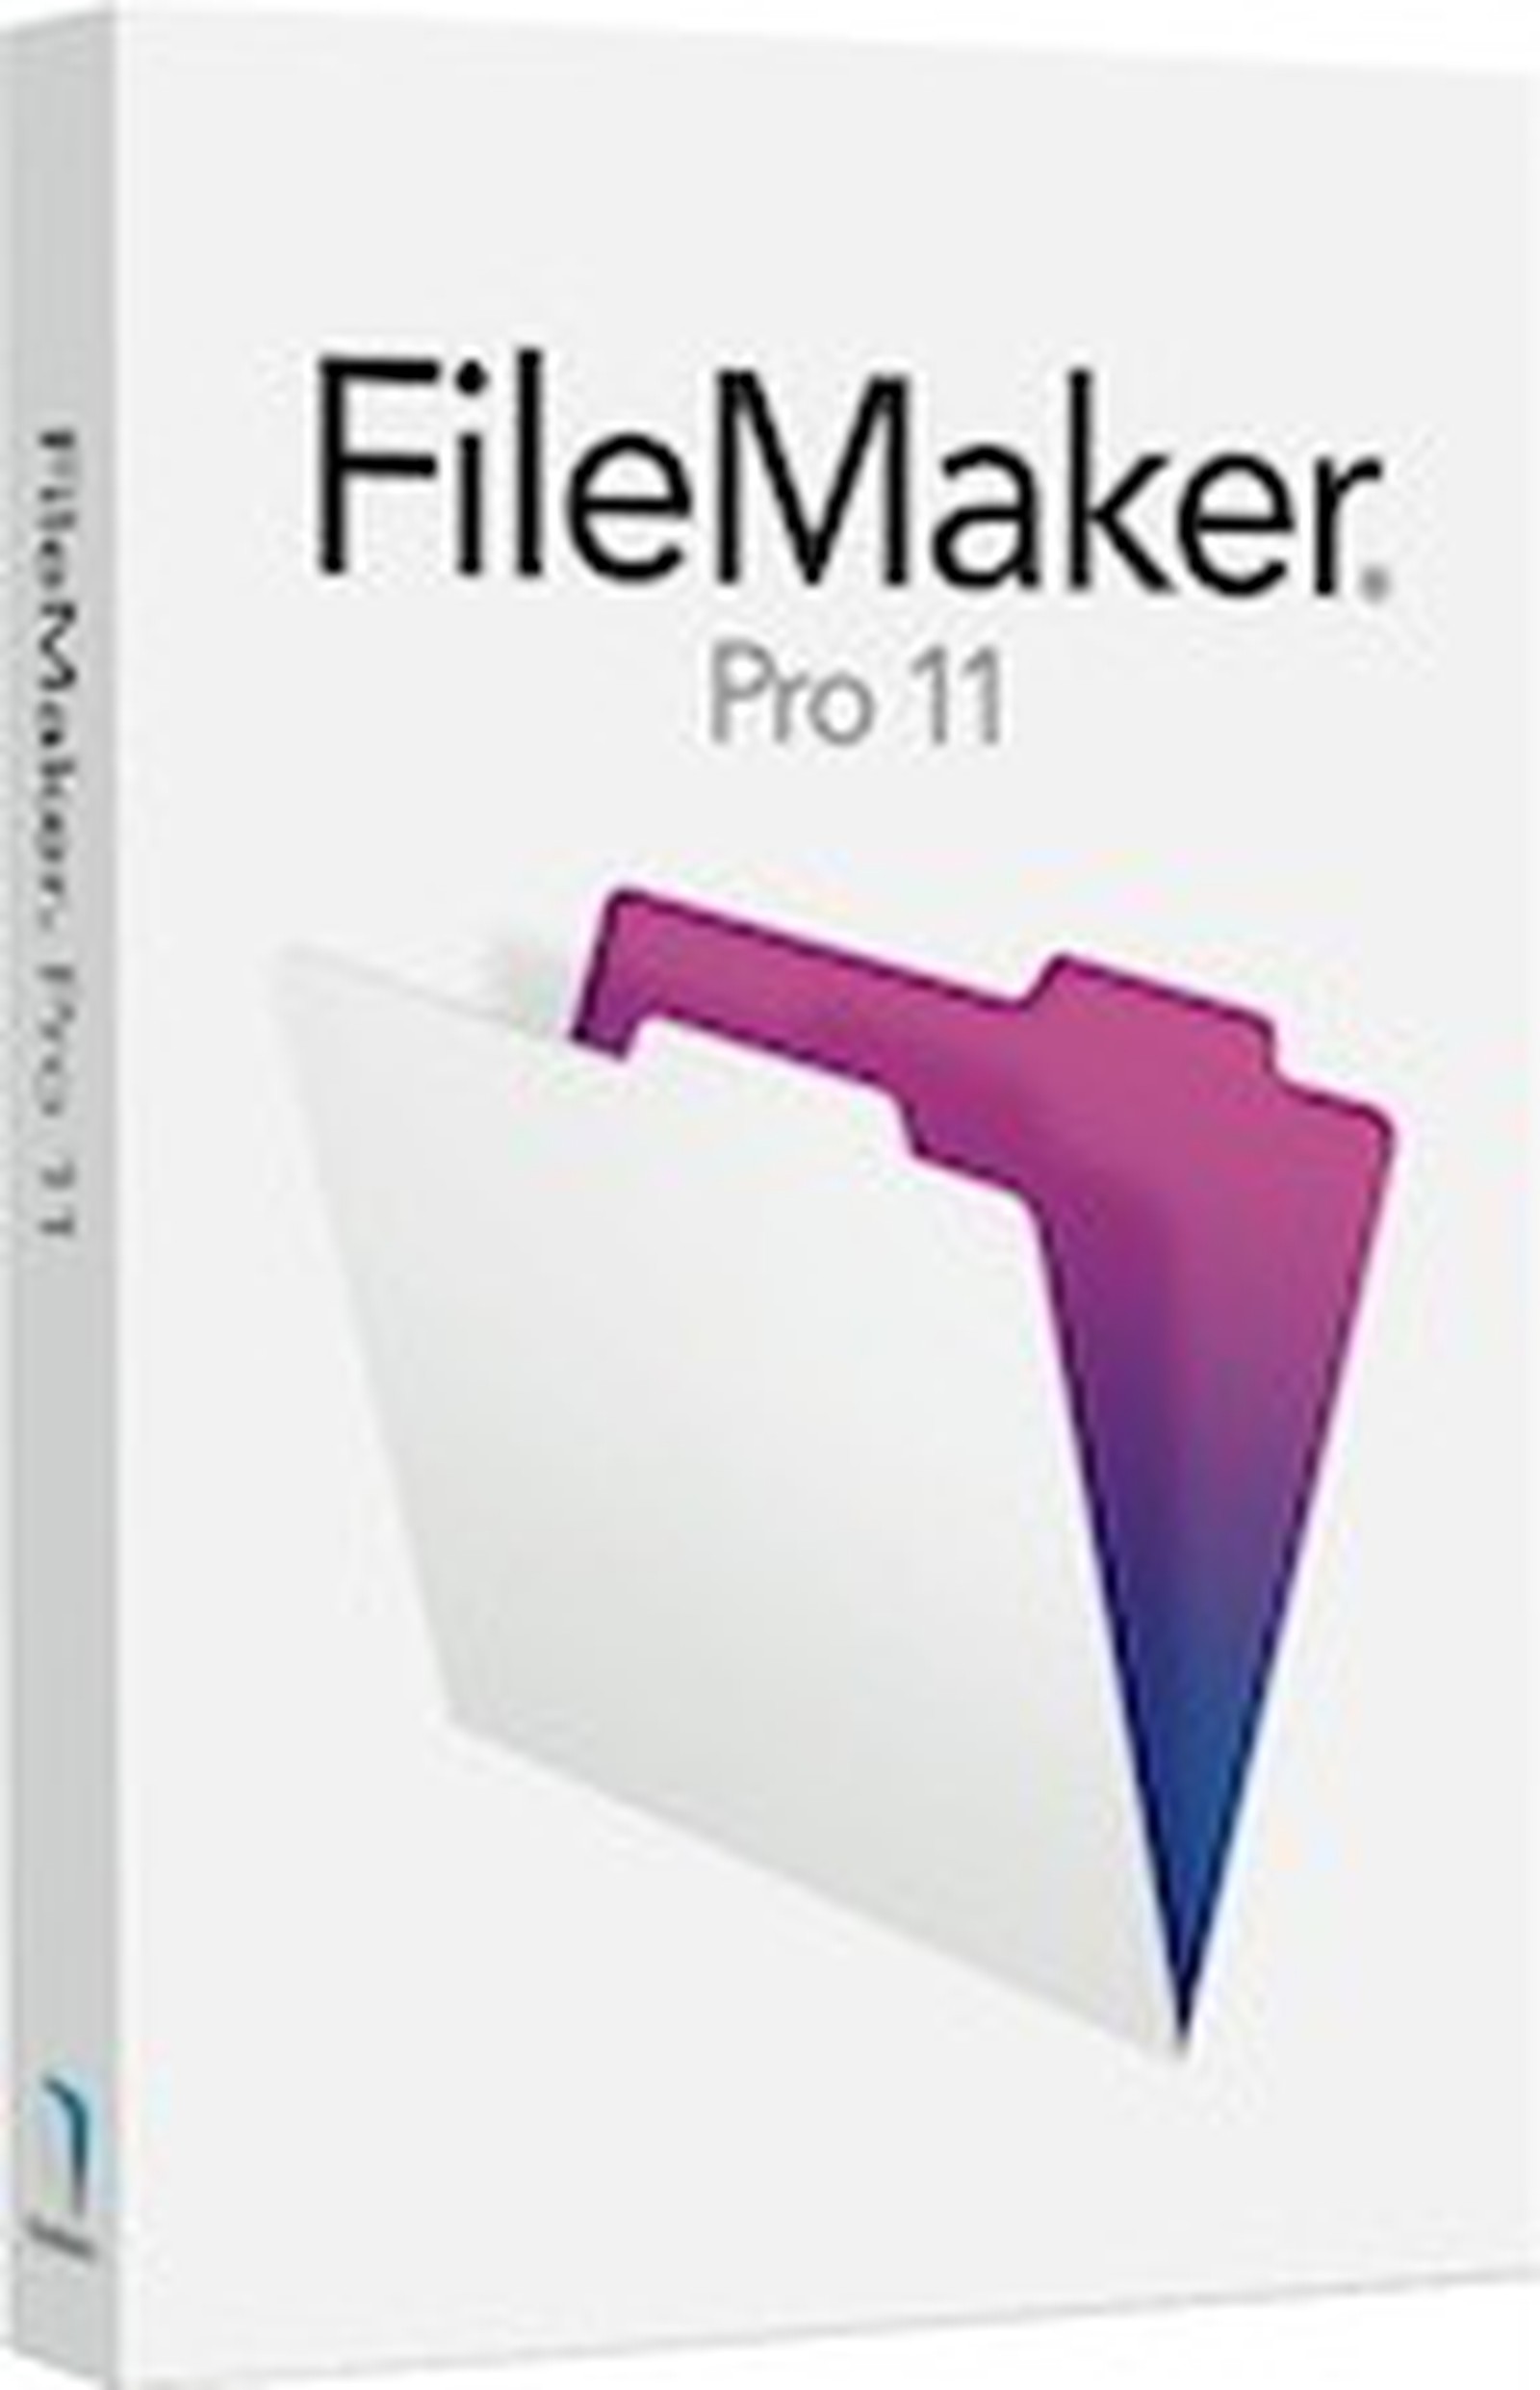 filemaker pro 11 mac download